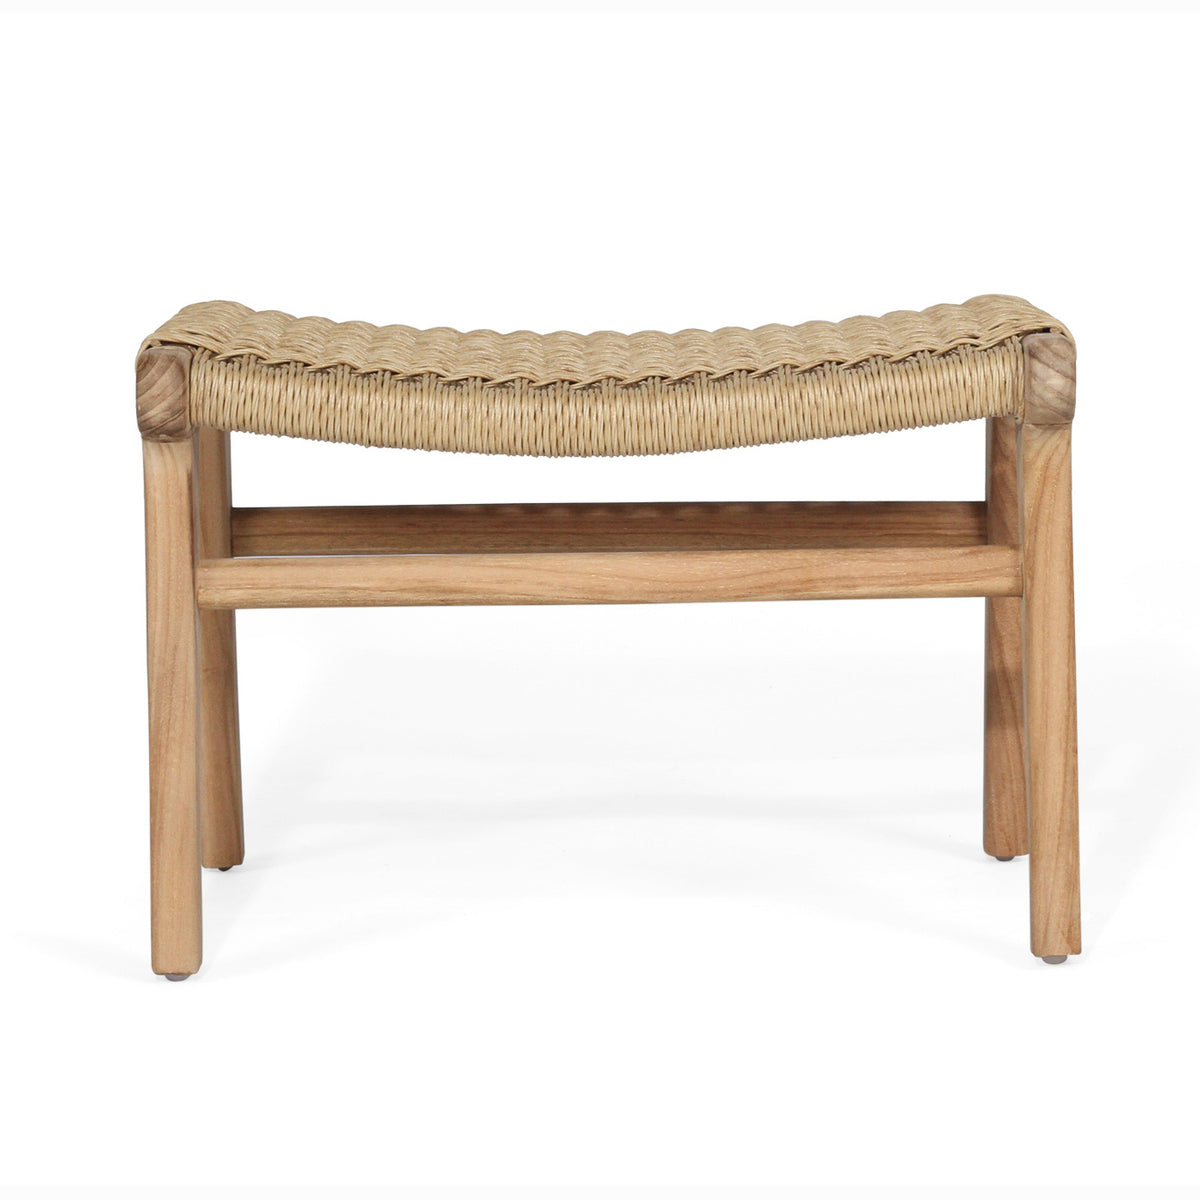 Earine Close Weave Lazy Chair Ottoman – Sand - Notbrand